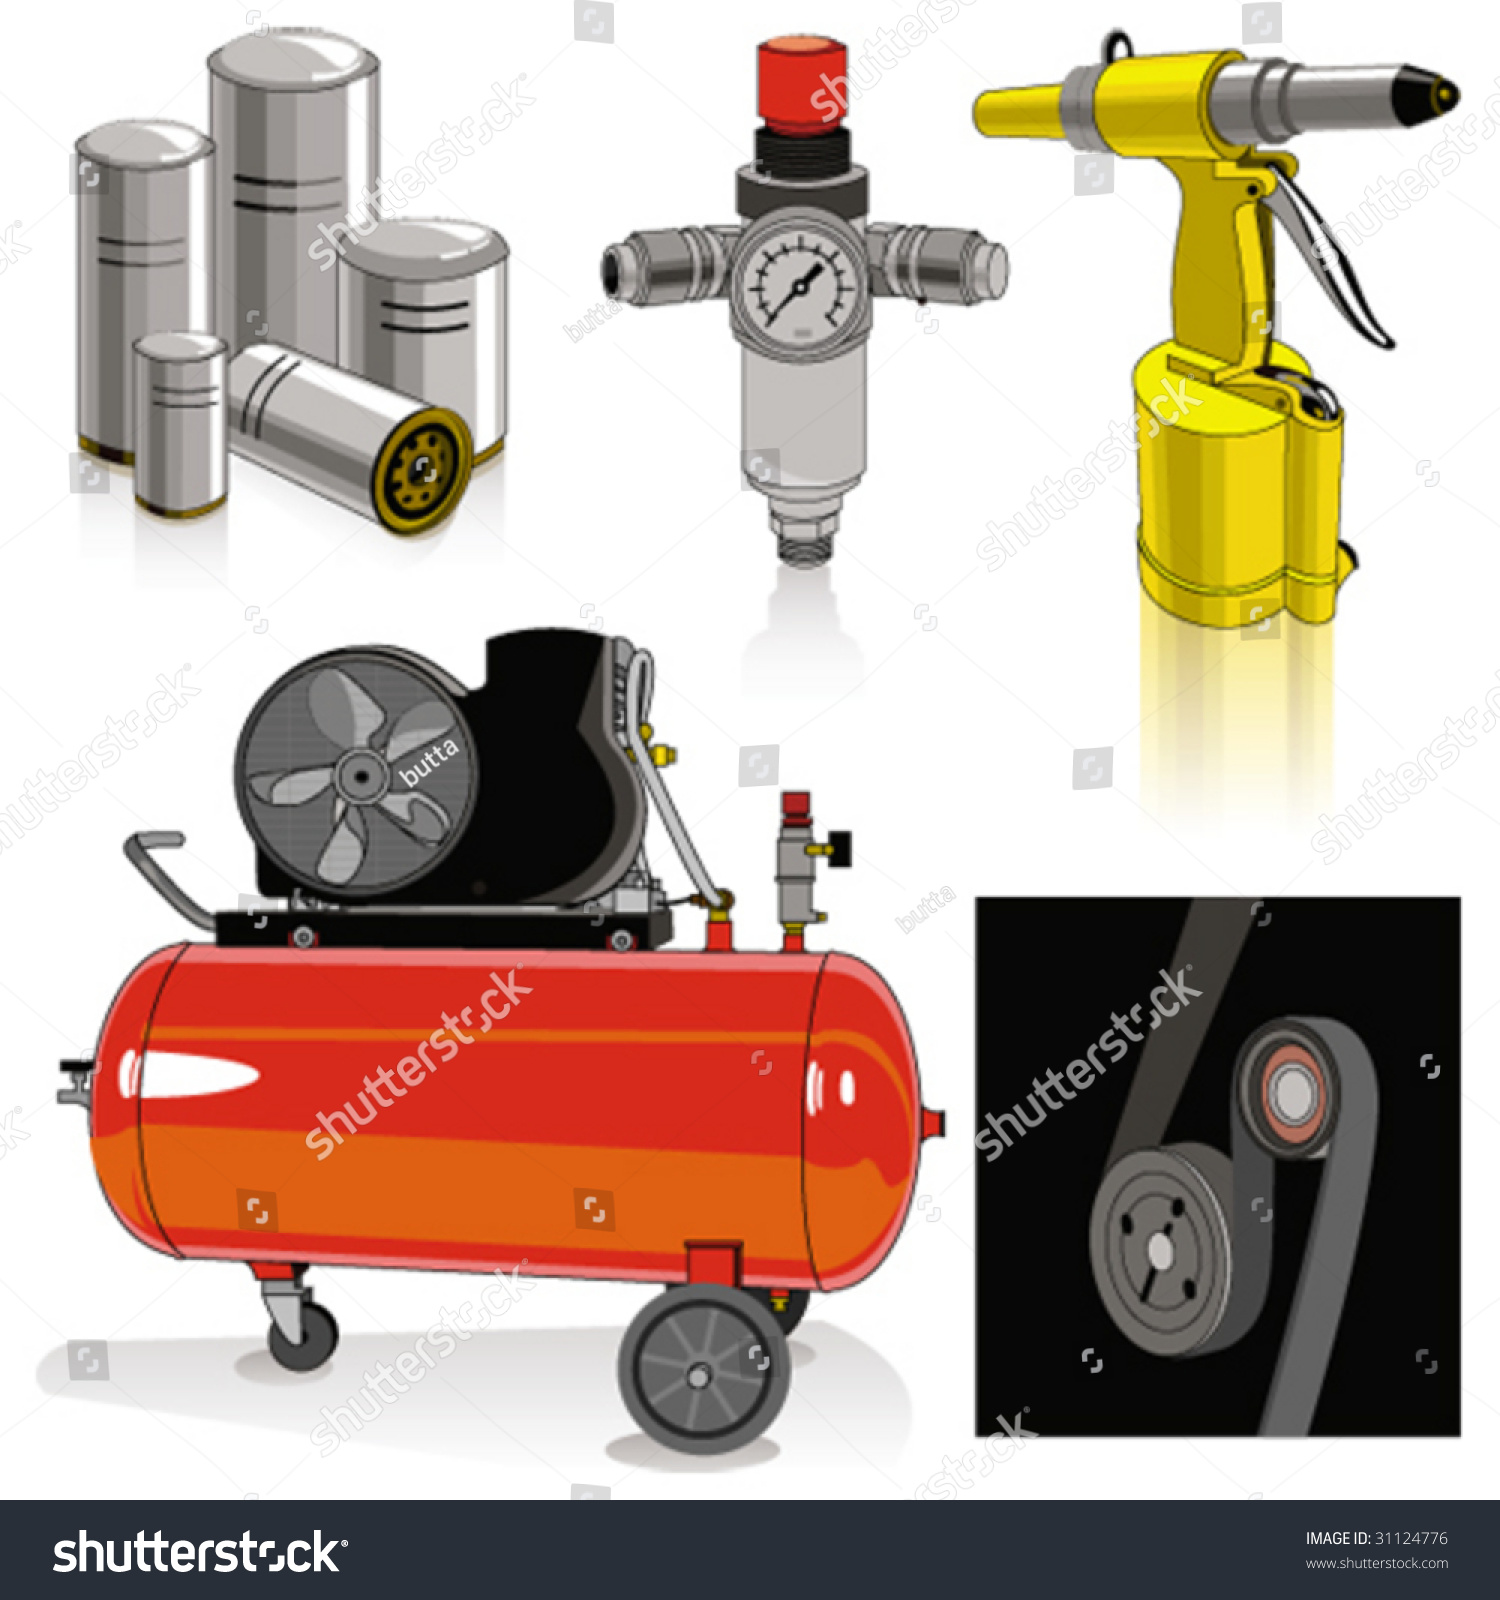 Compressor Stock Vector Illustration 31124776 : Shutterstock